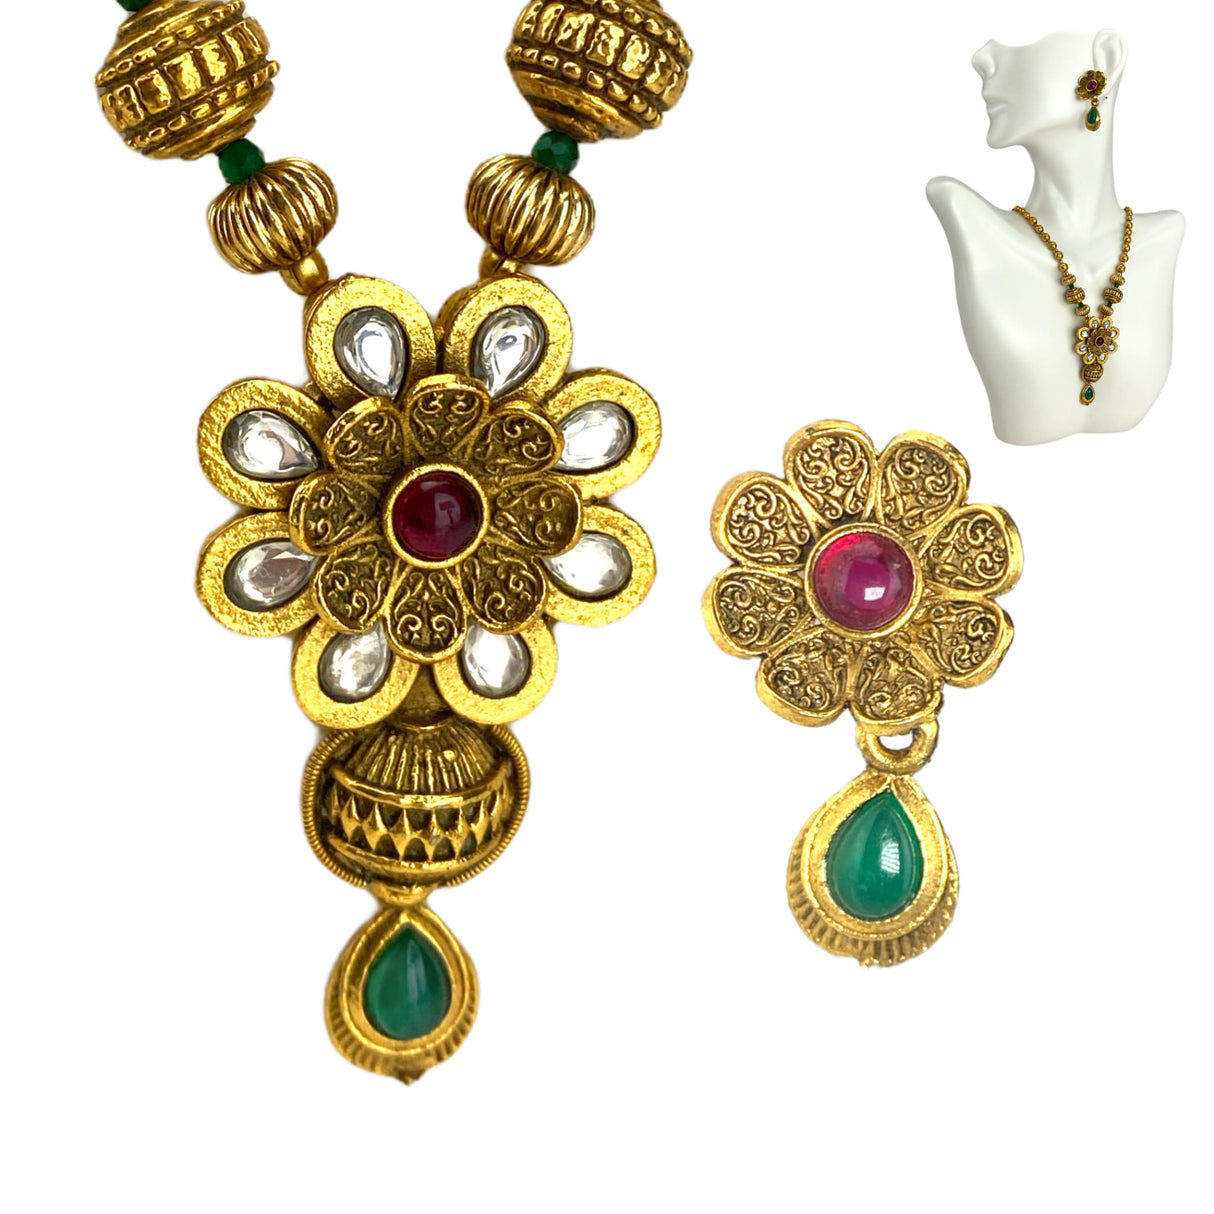 South indian and pakistan pendant jewelry set – matte